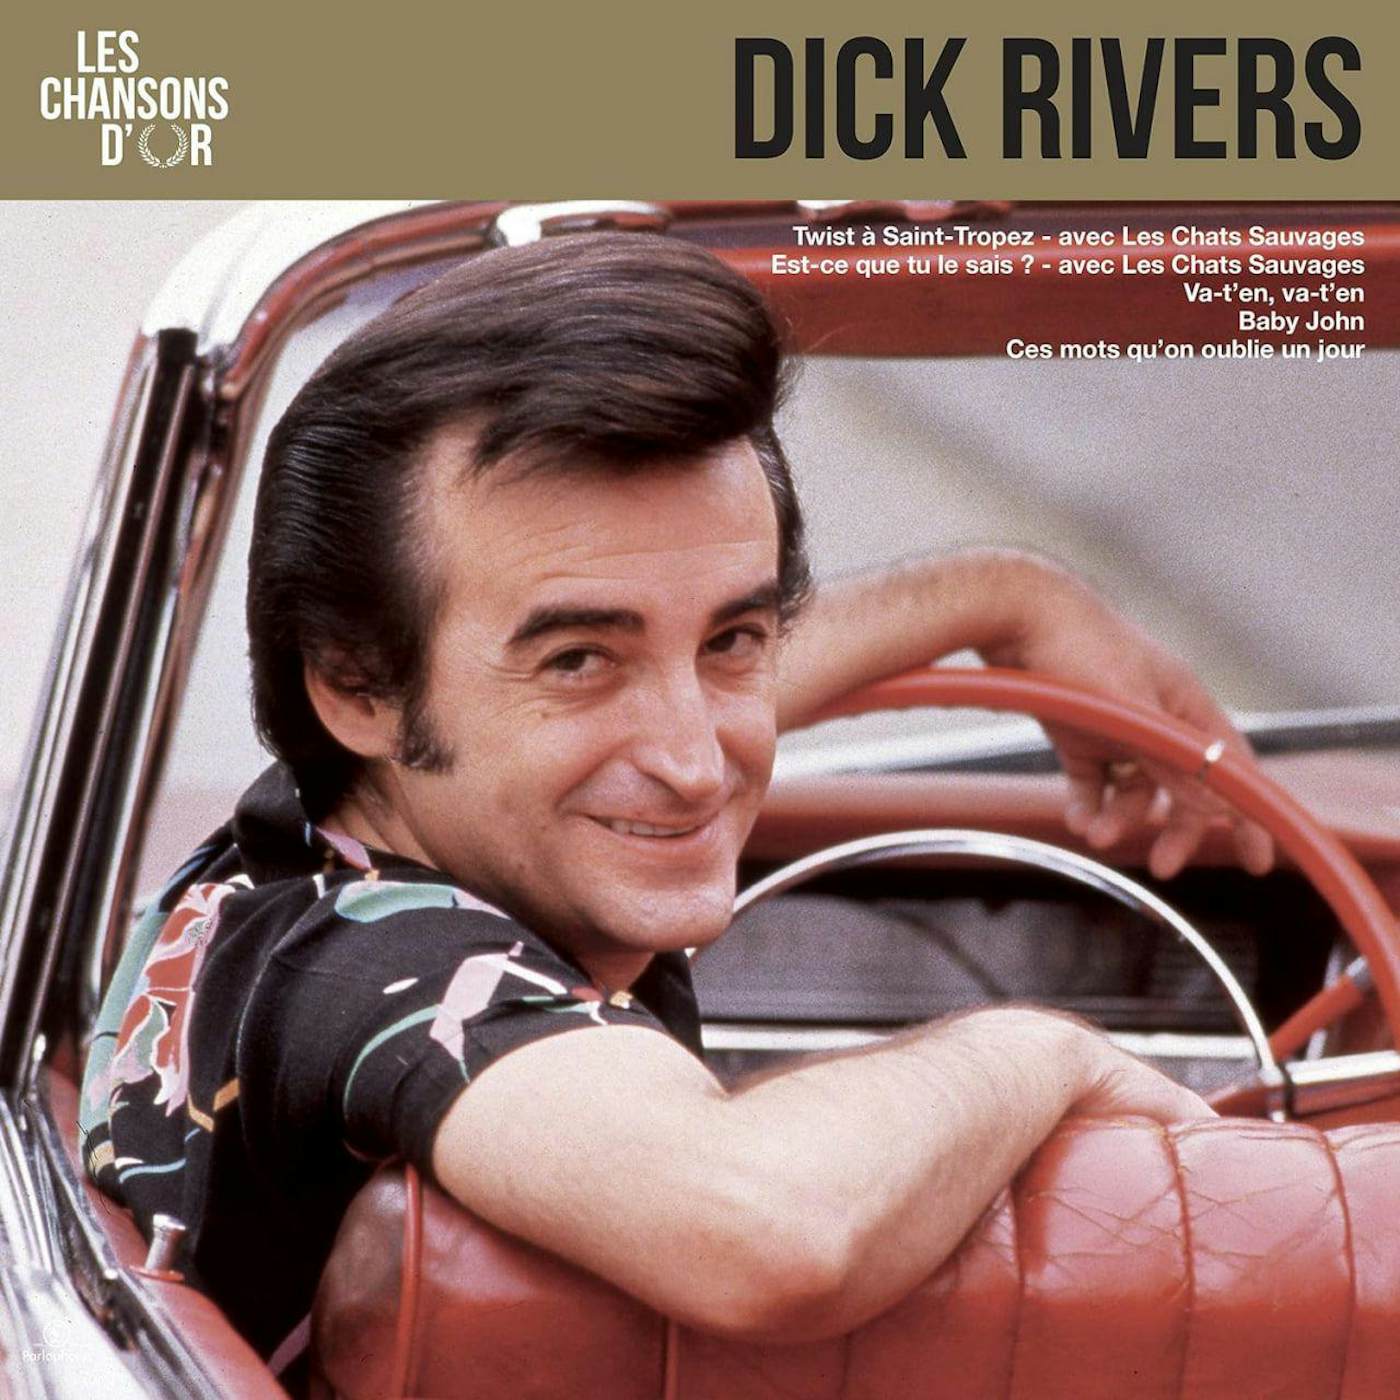 Dick Rivers LES CHANSONS D'OR Vinyl Record